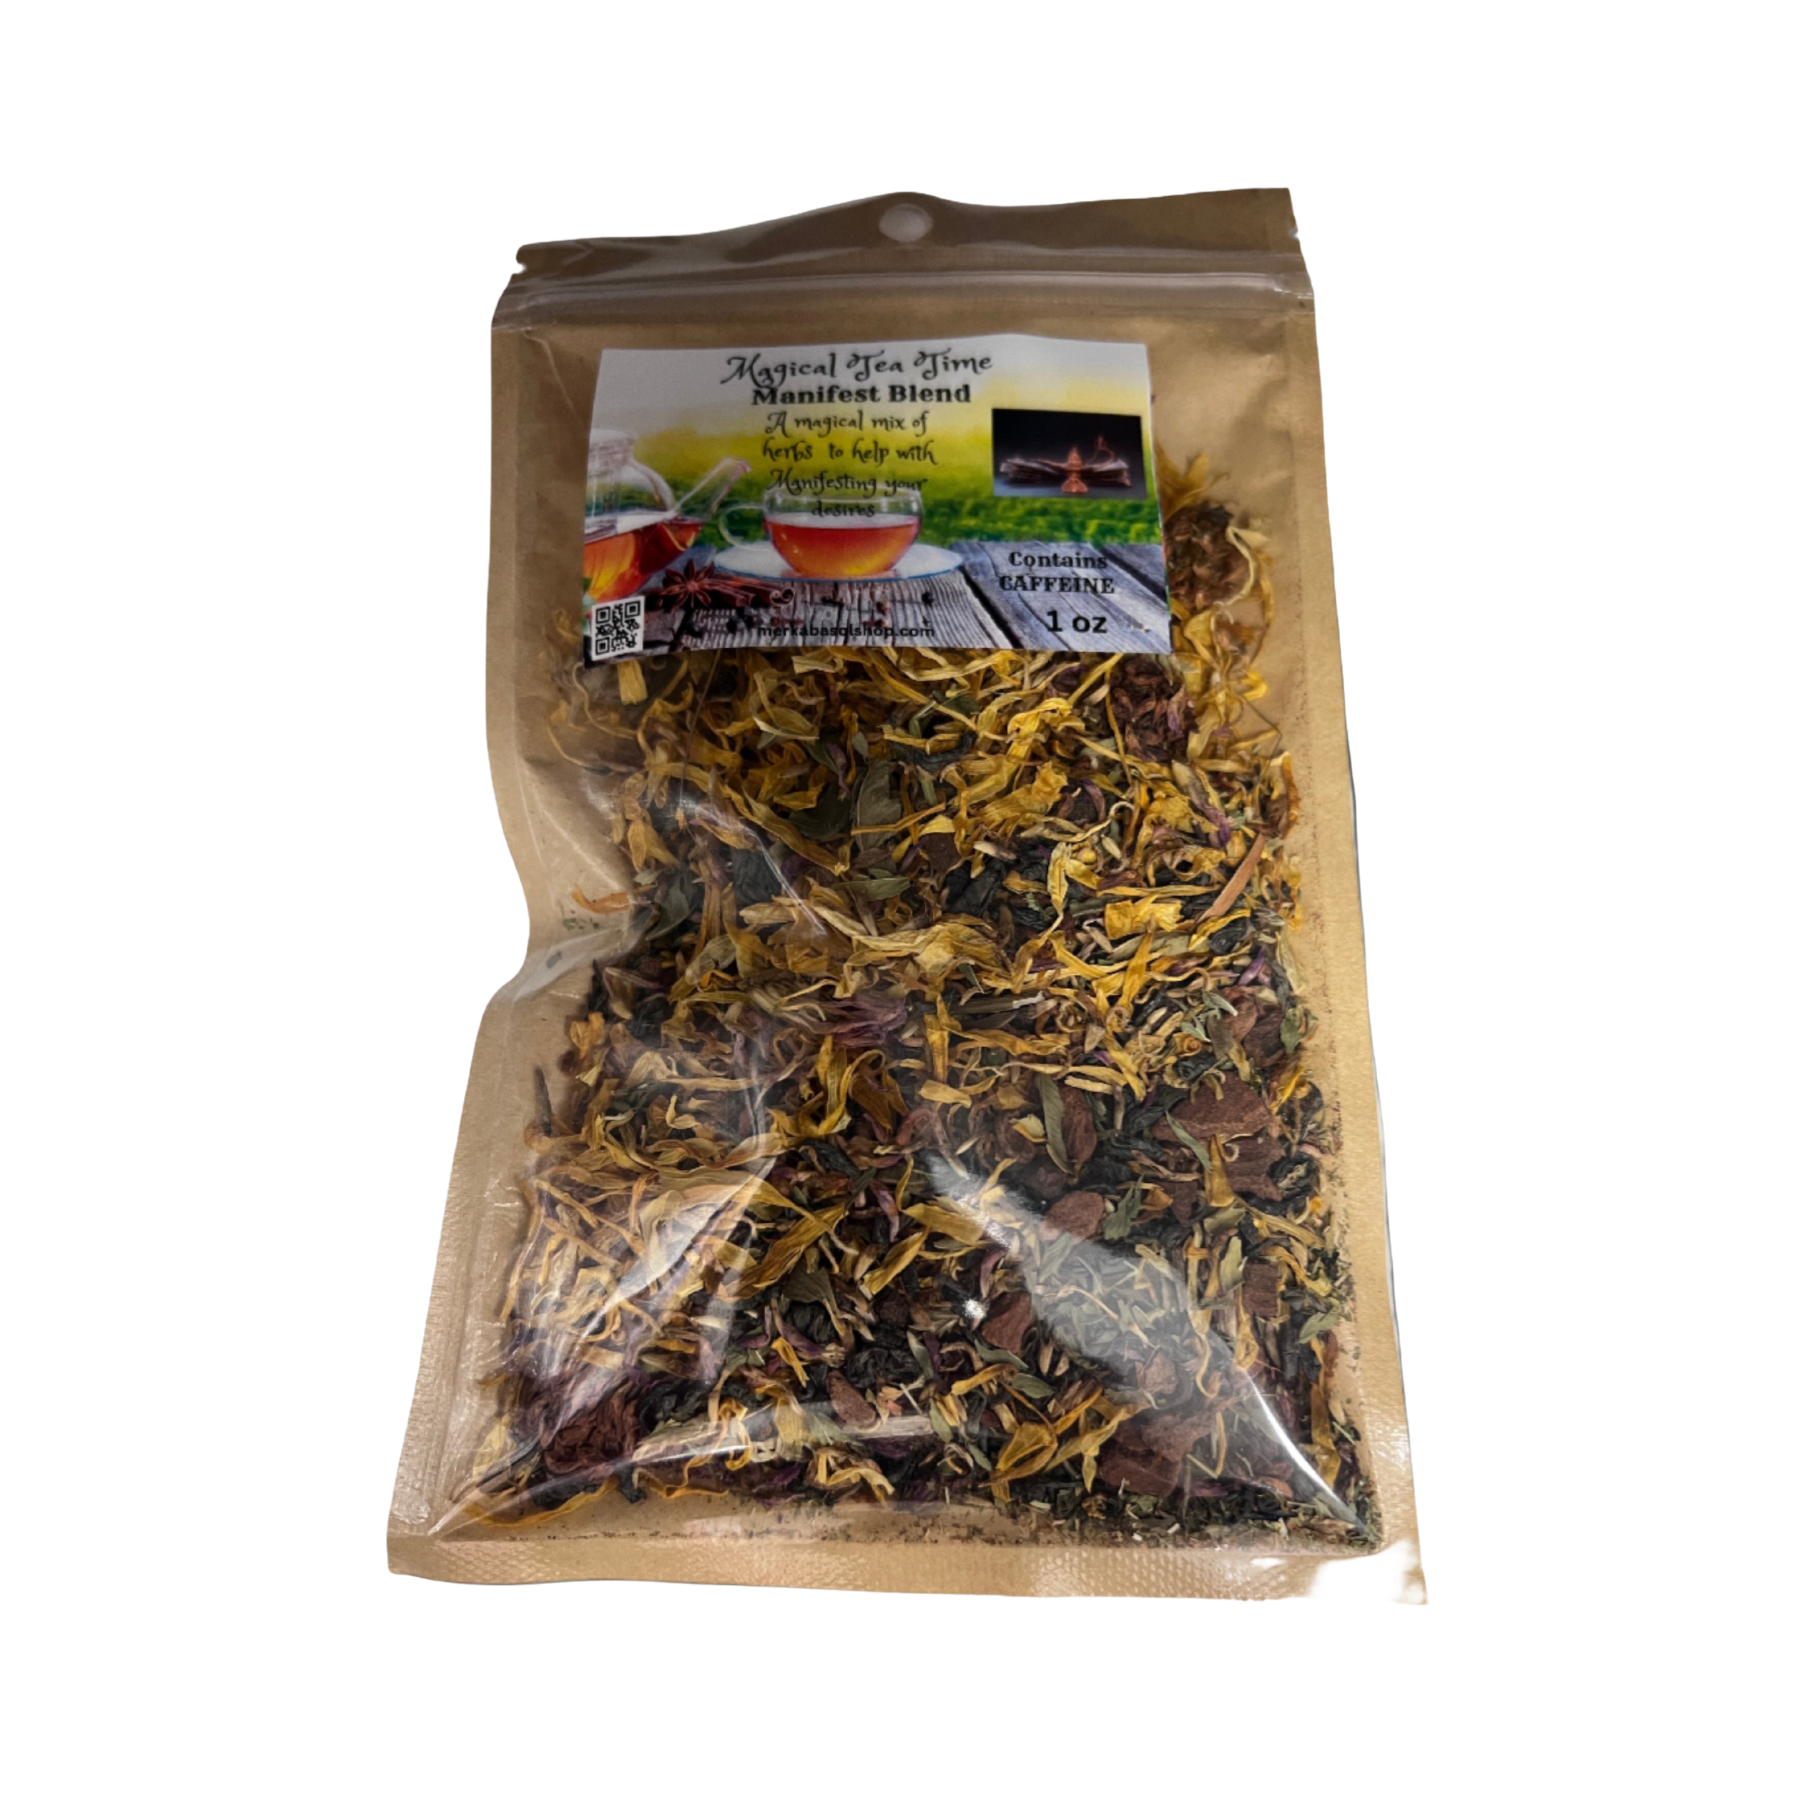 Dried mixed herbs called Manifestation Blend Tea packed inside a ziplock